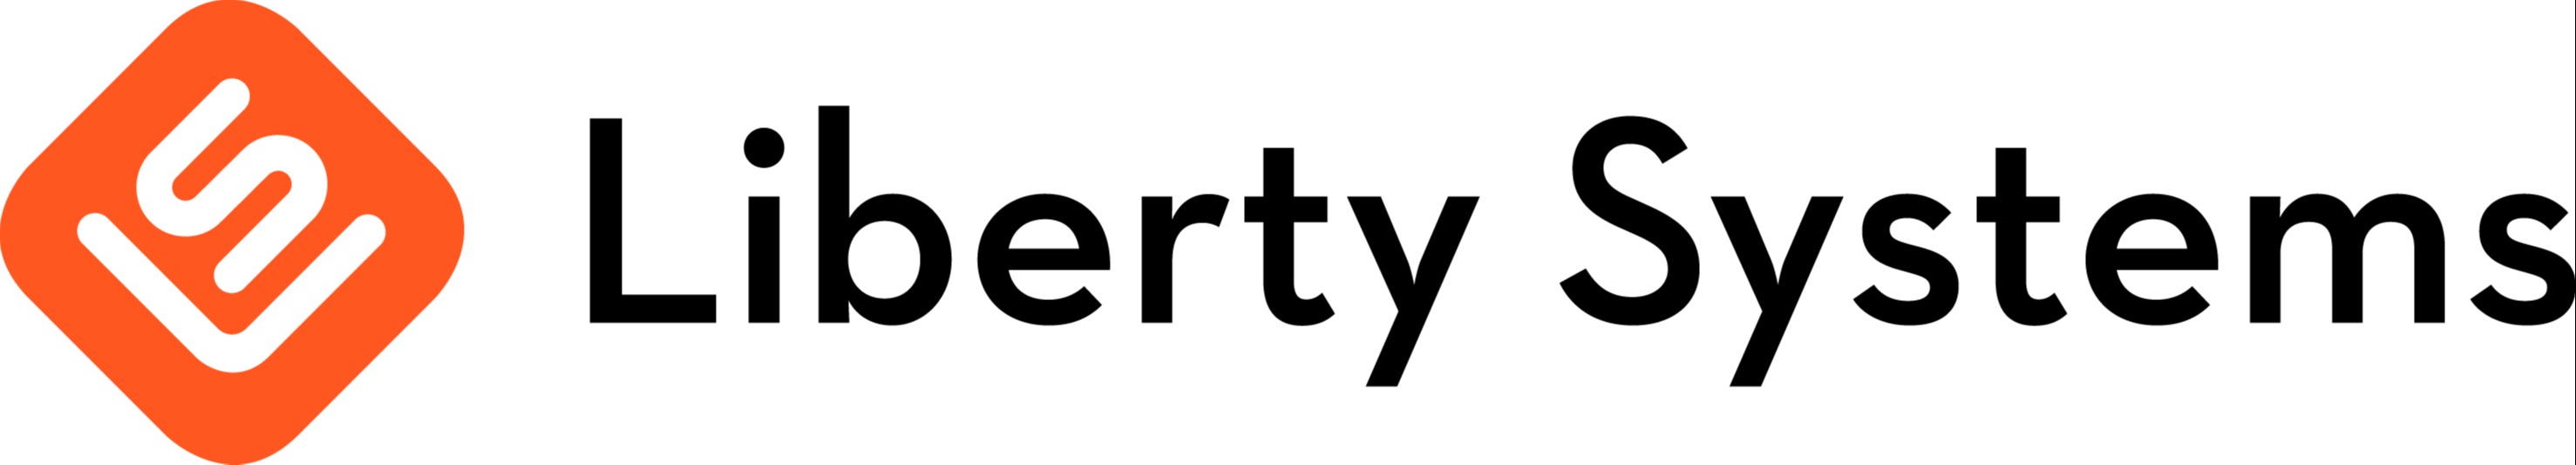 Liberty System Logo